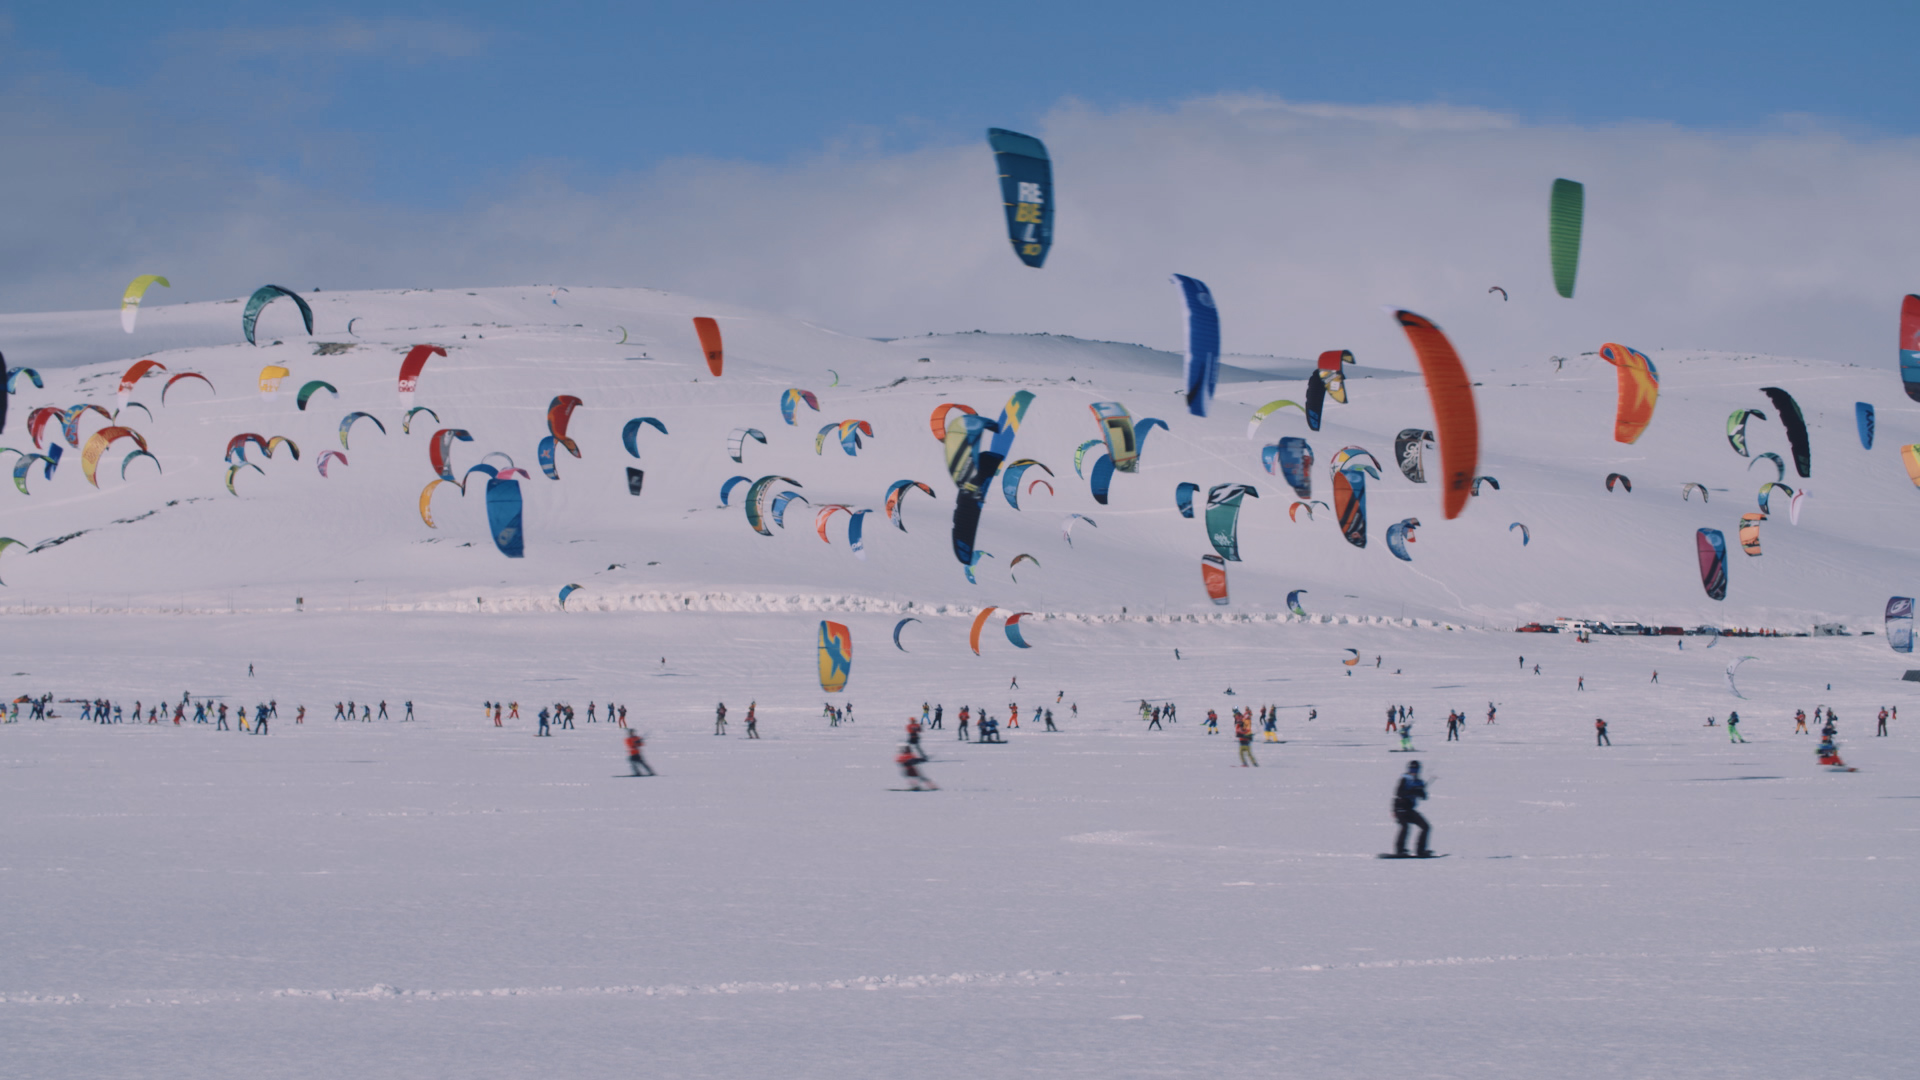 The World S Biggest Snowkiting Race Cnn Video